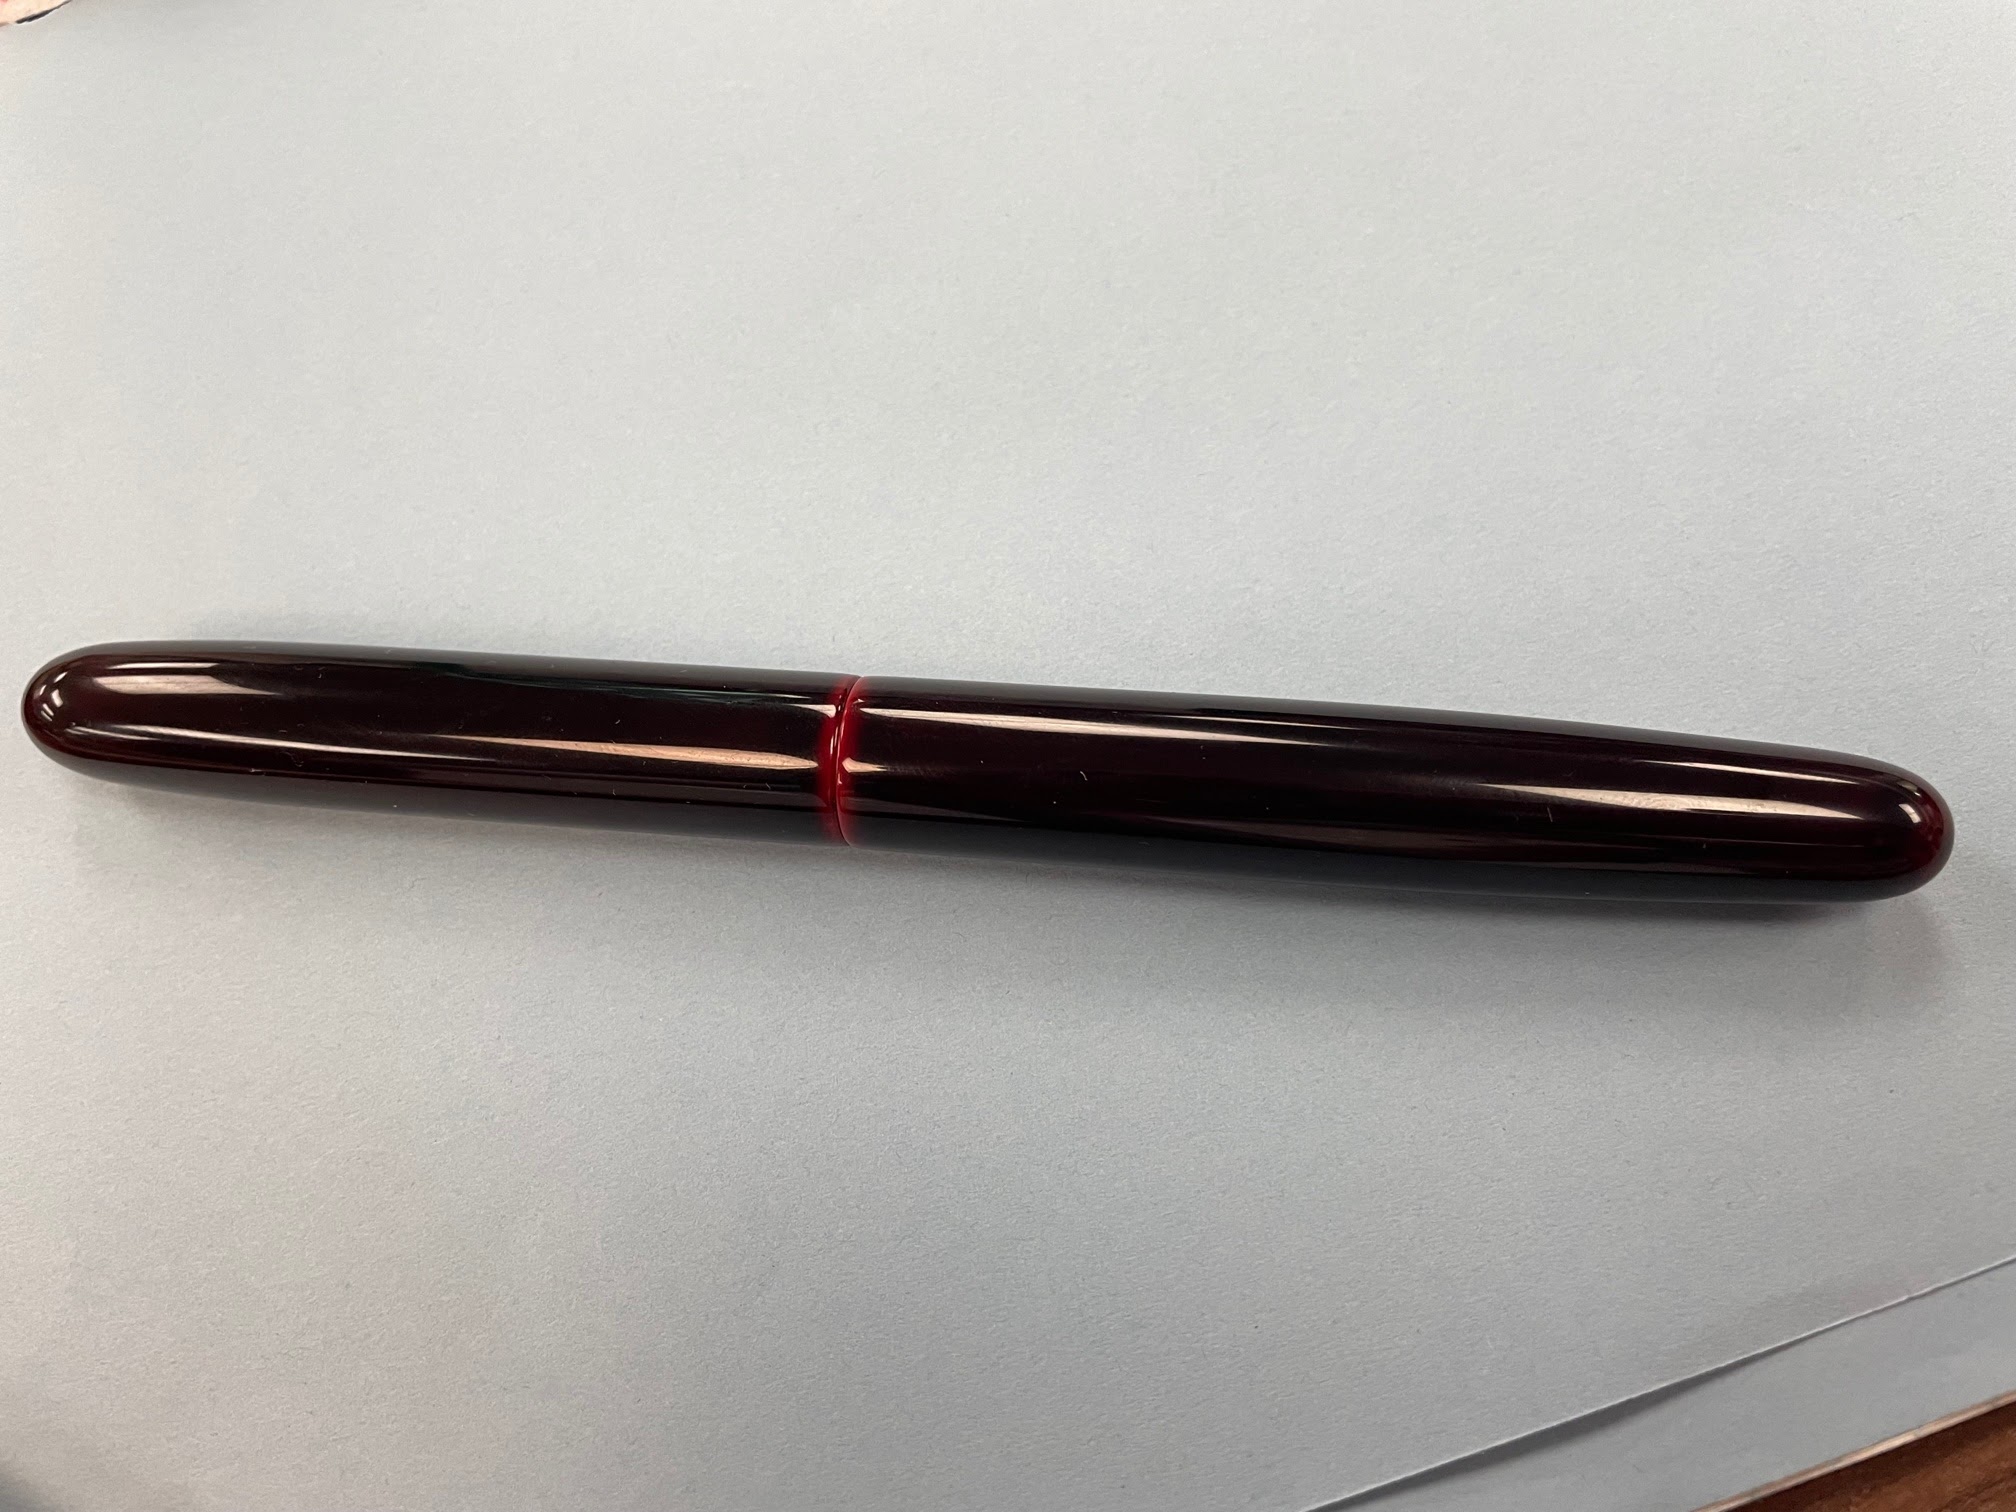 Platinum Preppy Fountain Pen - Fine Nib - 0.3mm - Black Ink — La